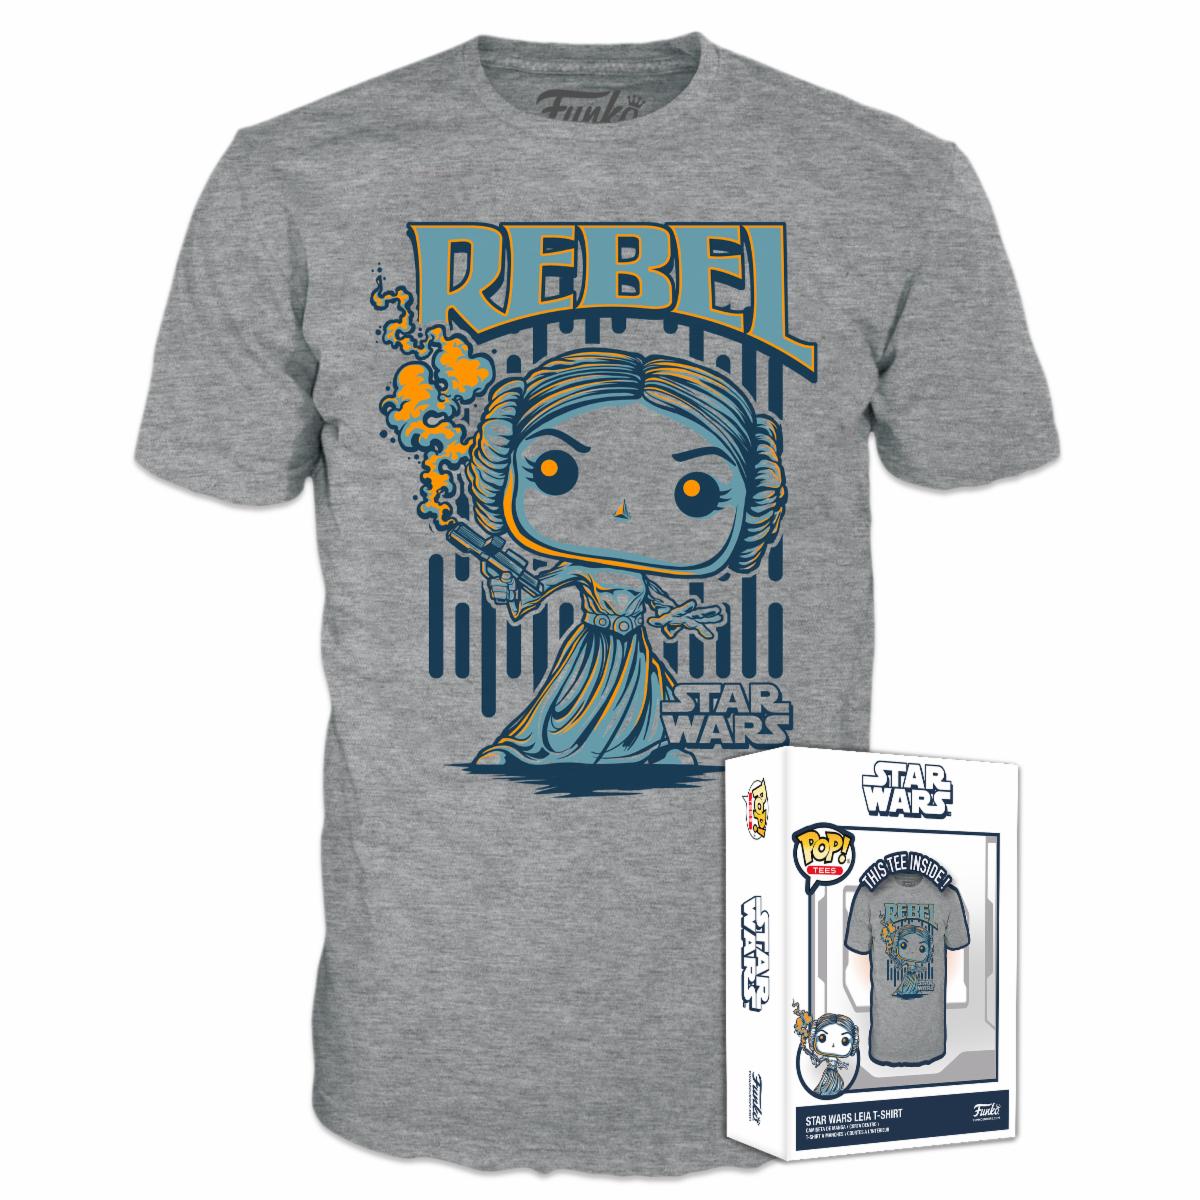 Boxed Tee - Leia Rebel Funko T-shirt - Star Wars